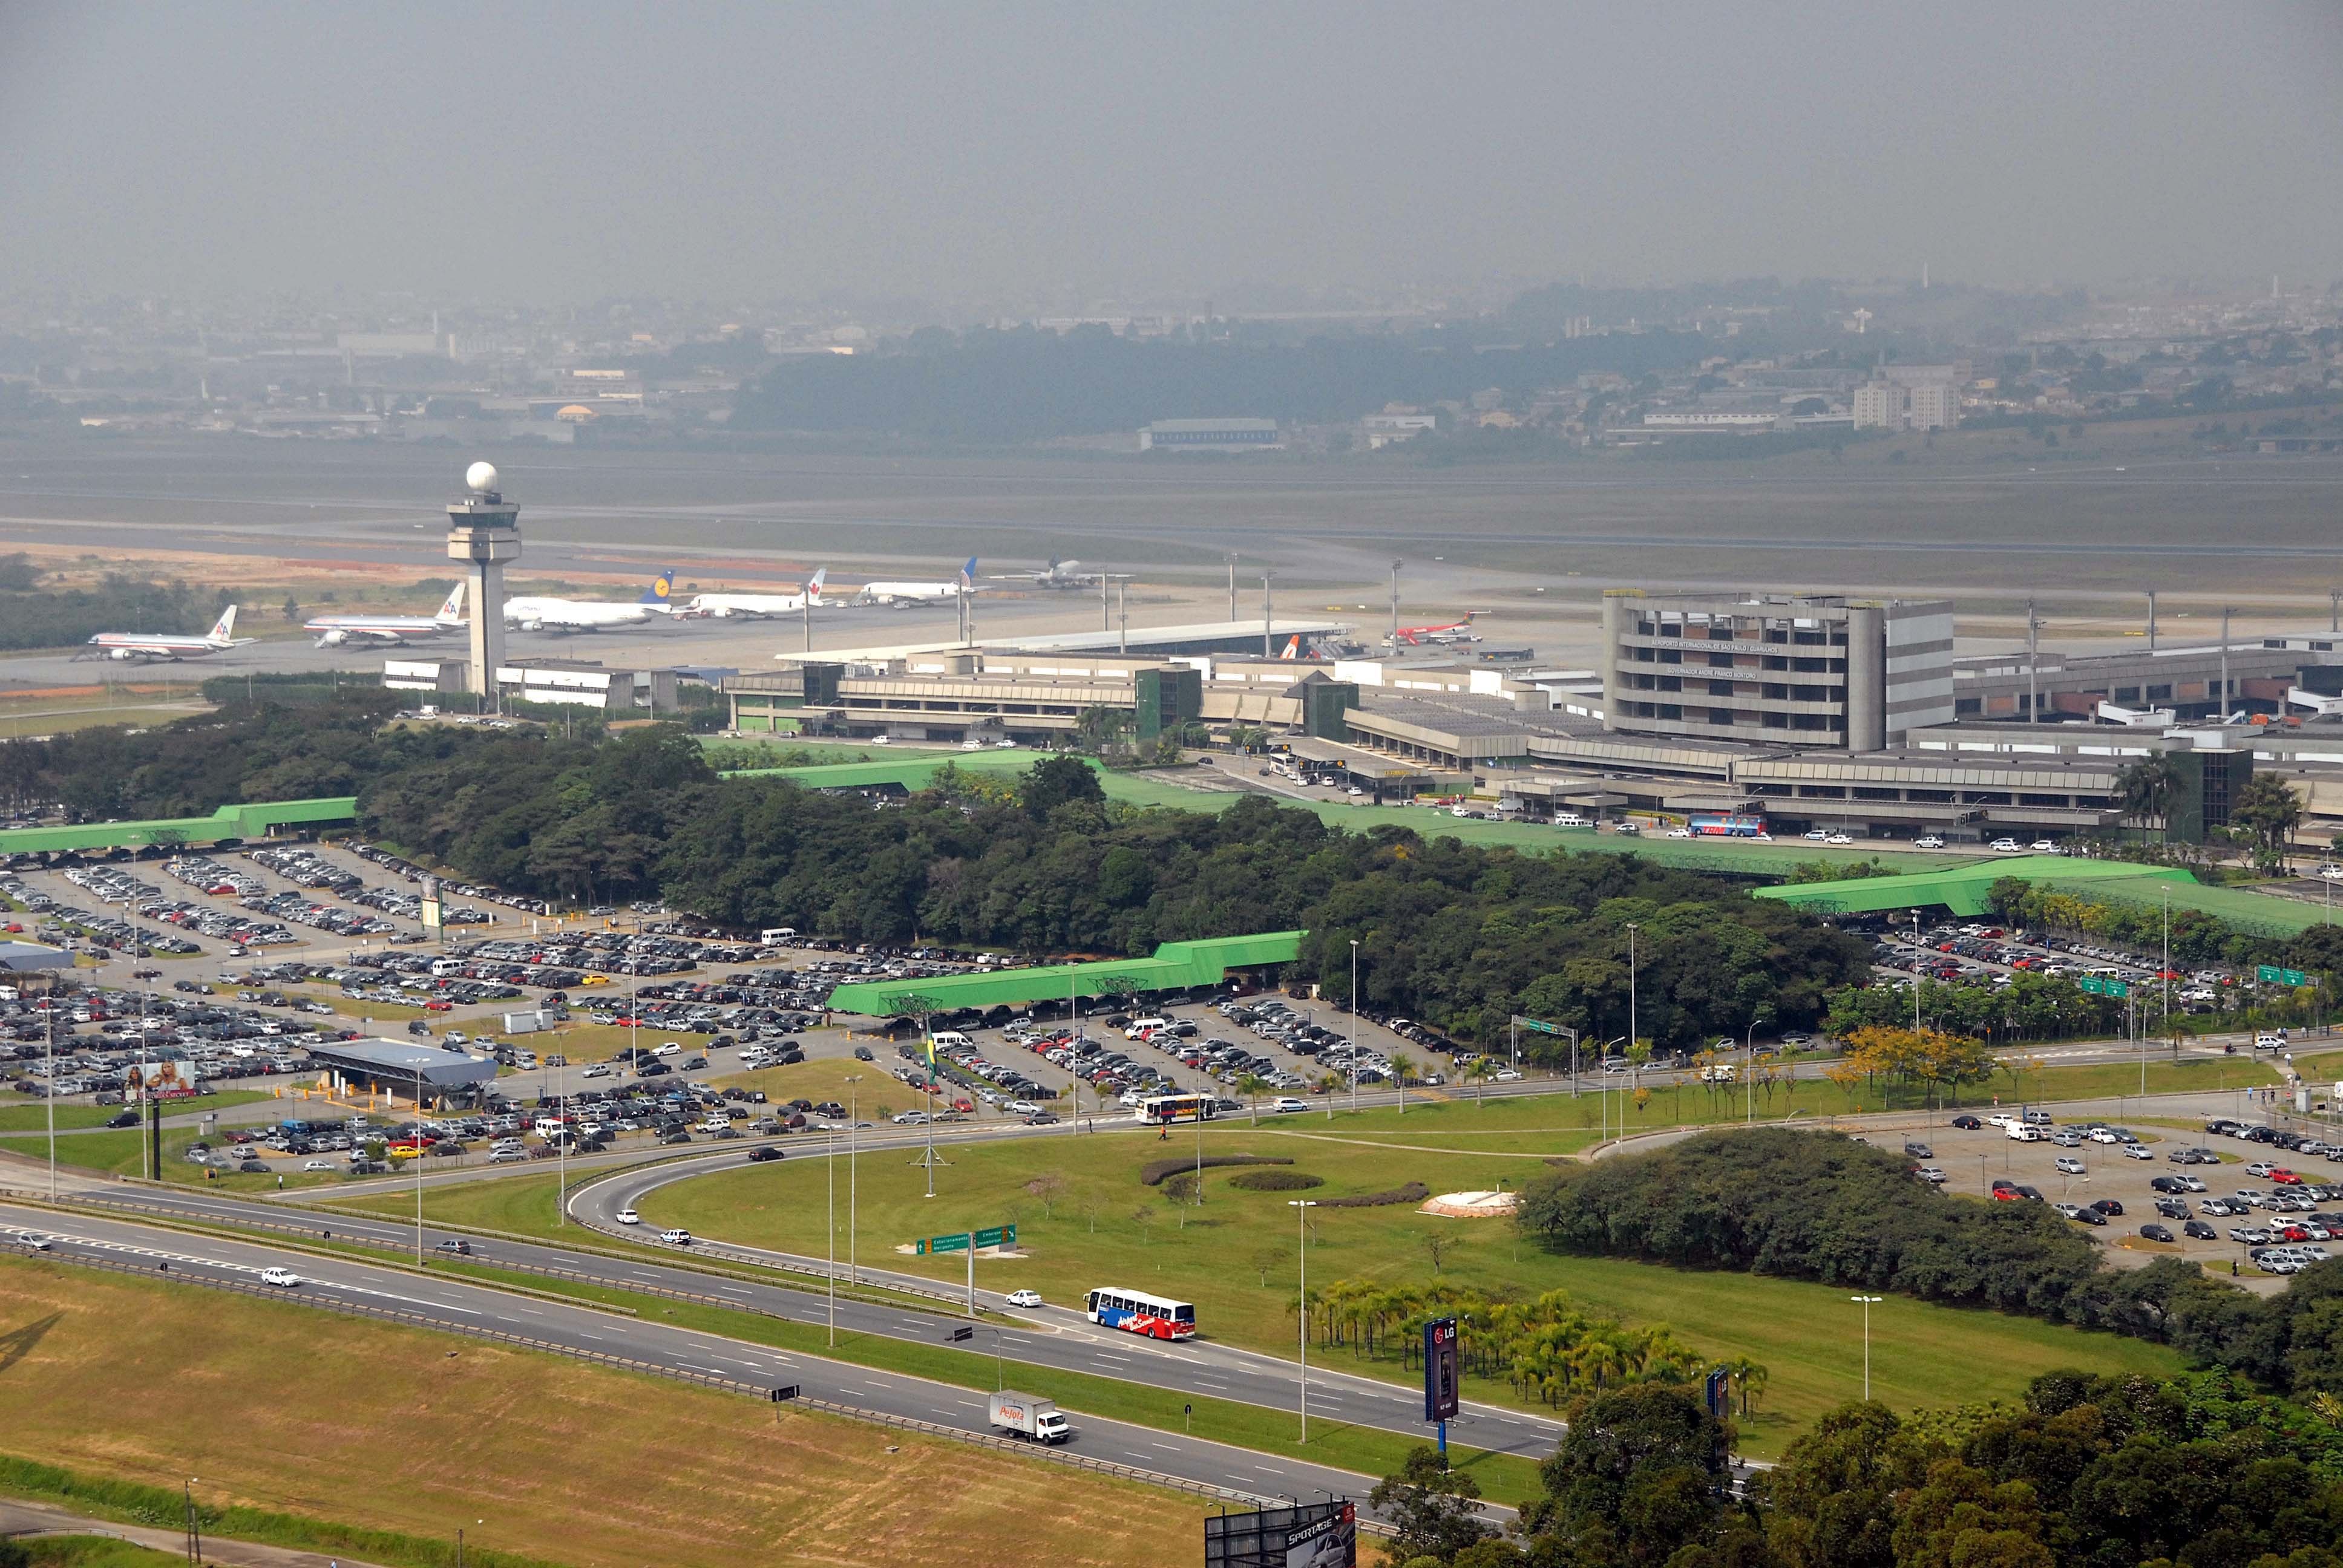 Aeroporto de Cumbica define estratégias para combater o coronavírus após reunião com a Anvisa thumbnail